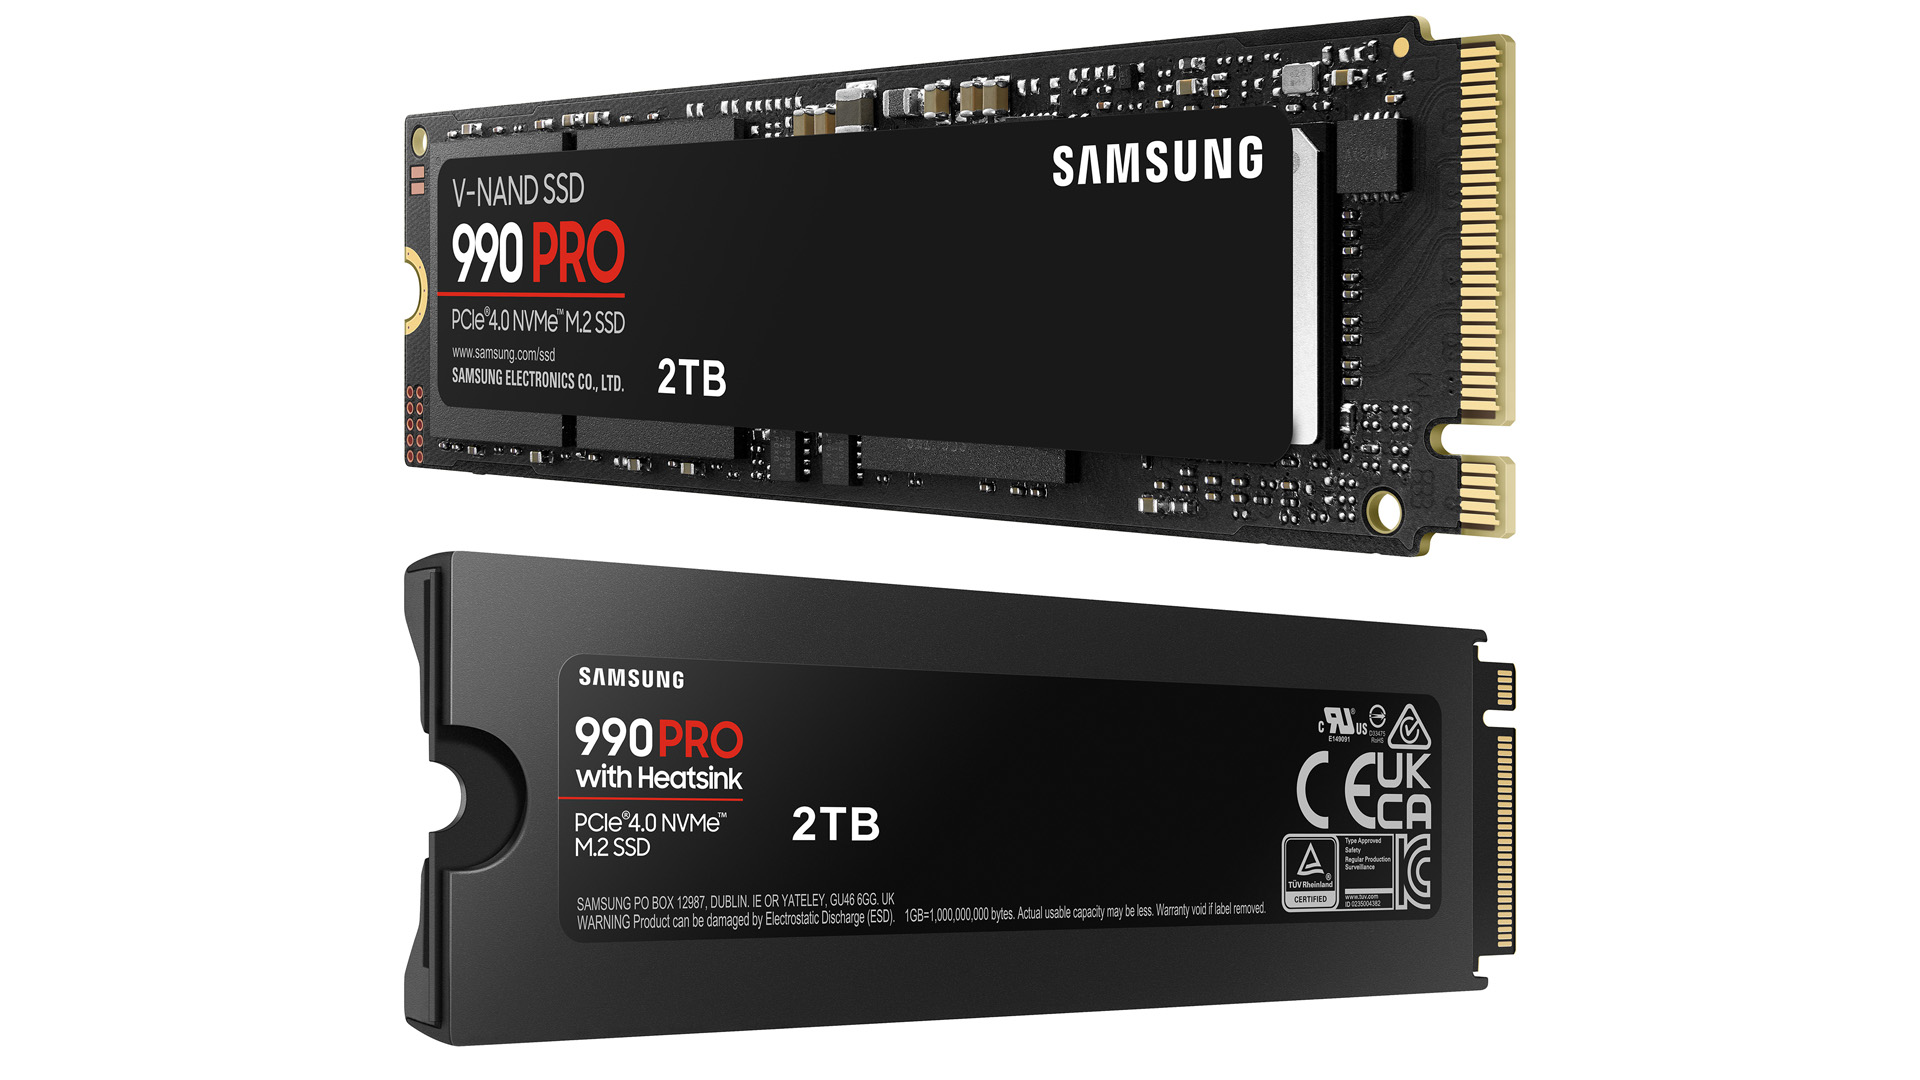 SAMSUNG SSD 990 PRO with Heatsink 1TB 管1 | www.fleettracktz.com